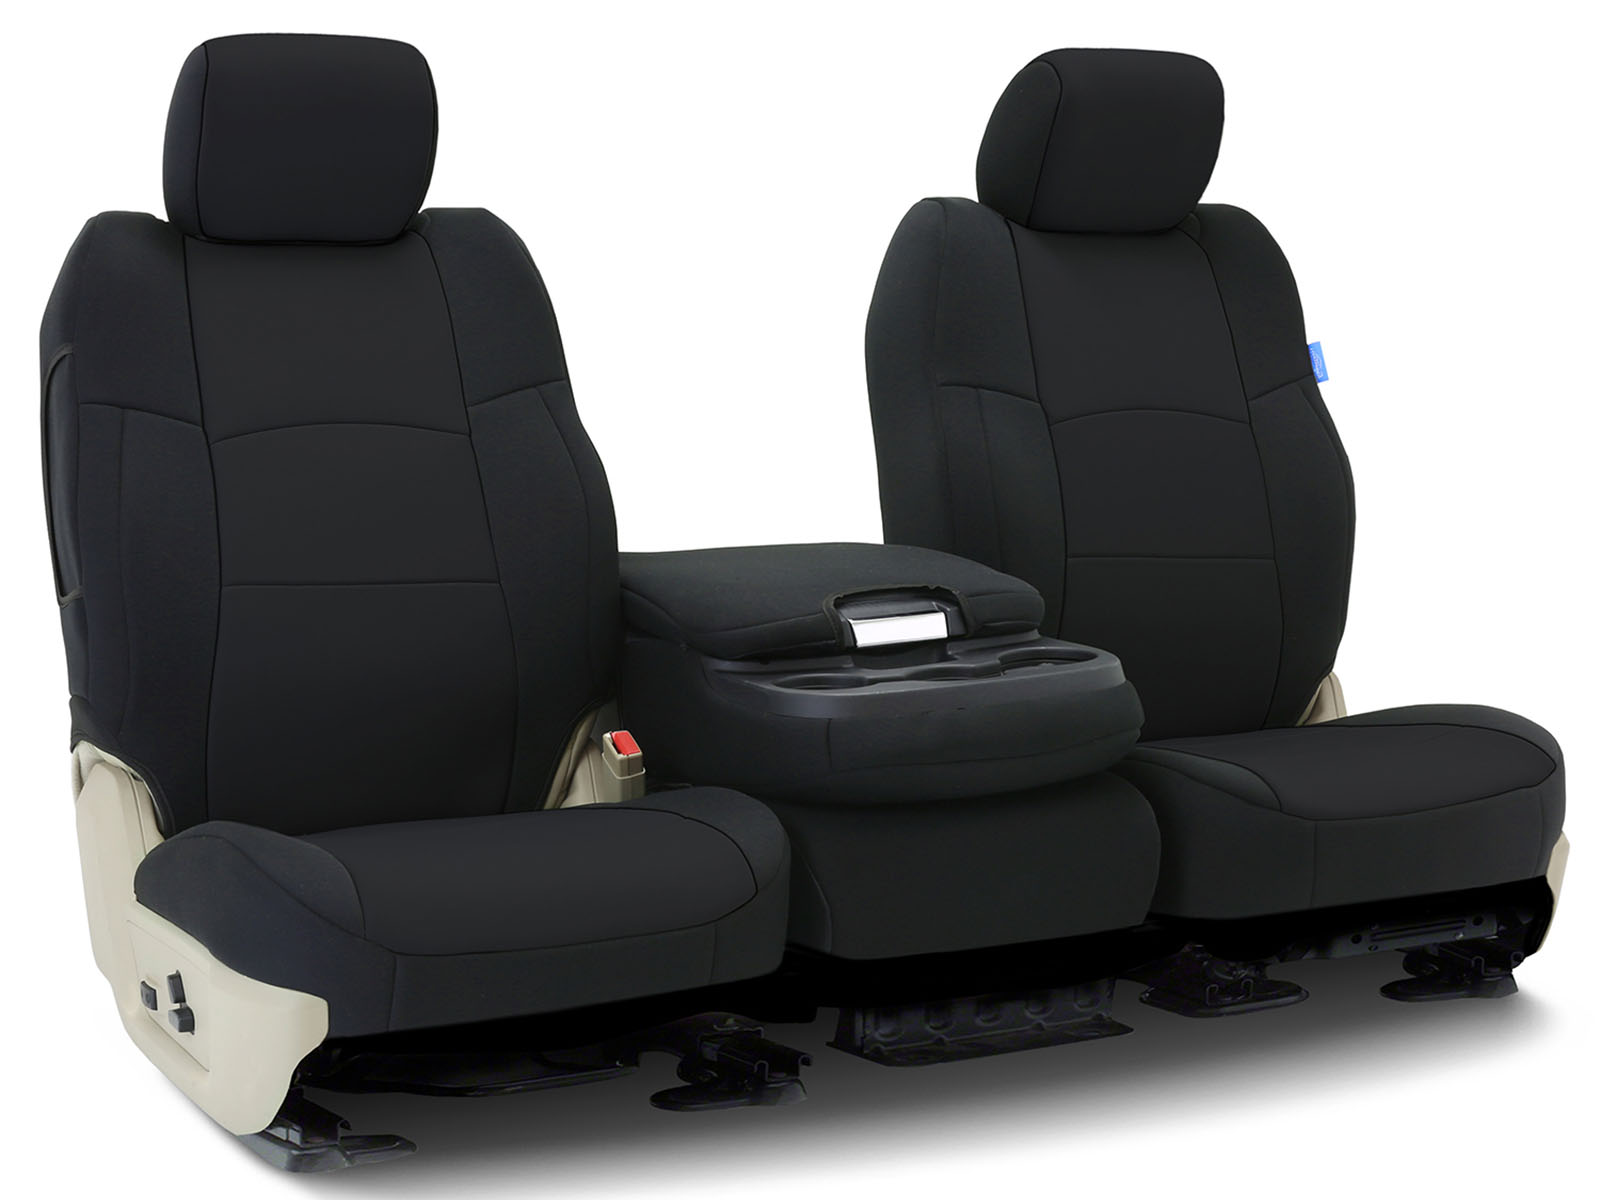 2013 Chevy Silverado 1500 Seat Covers RealTruck